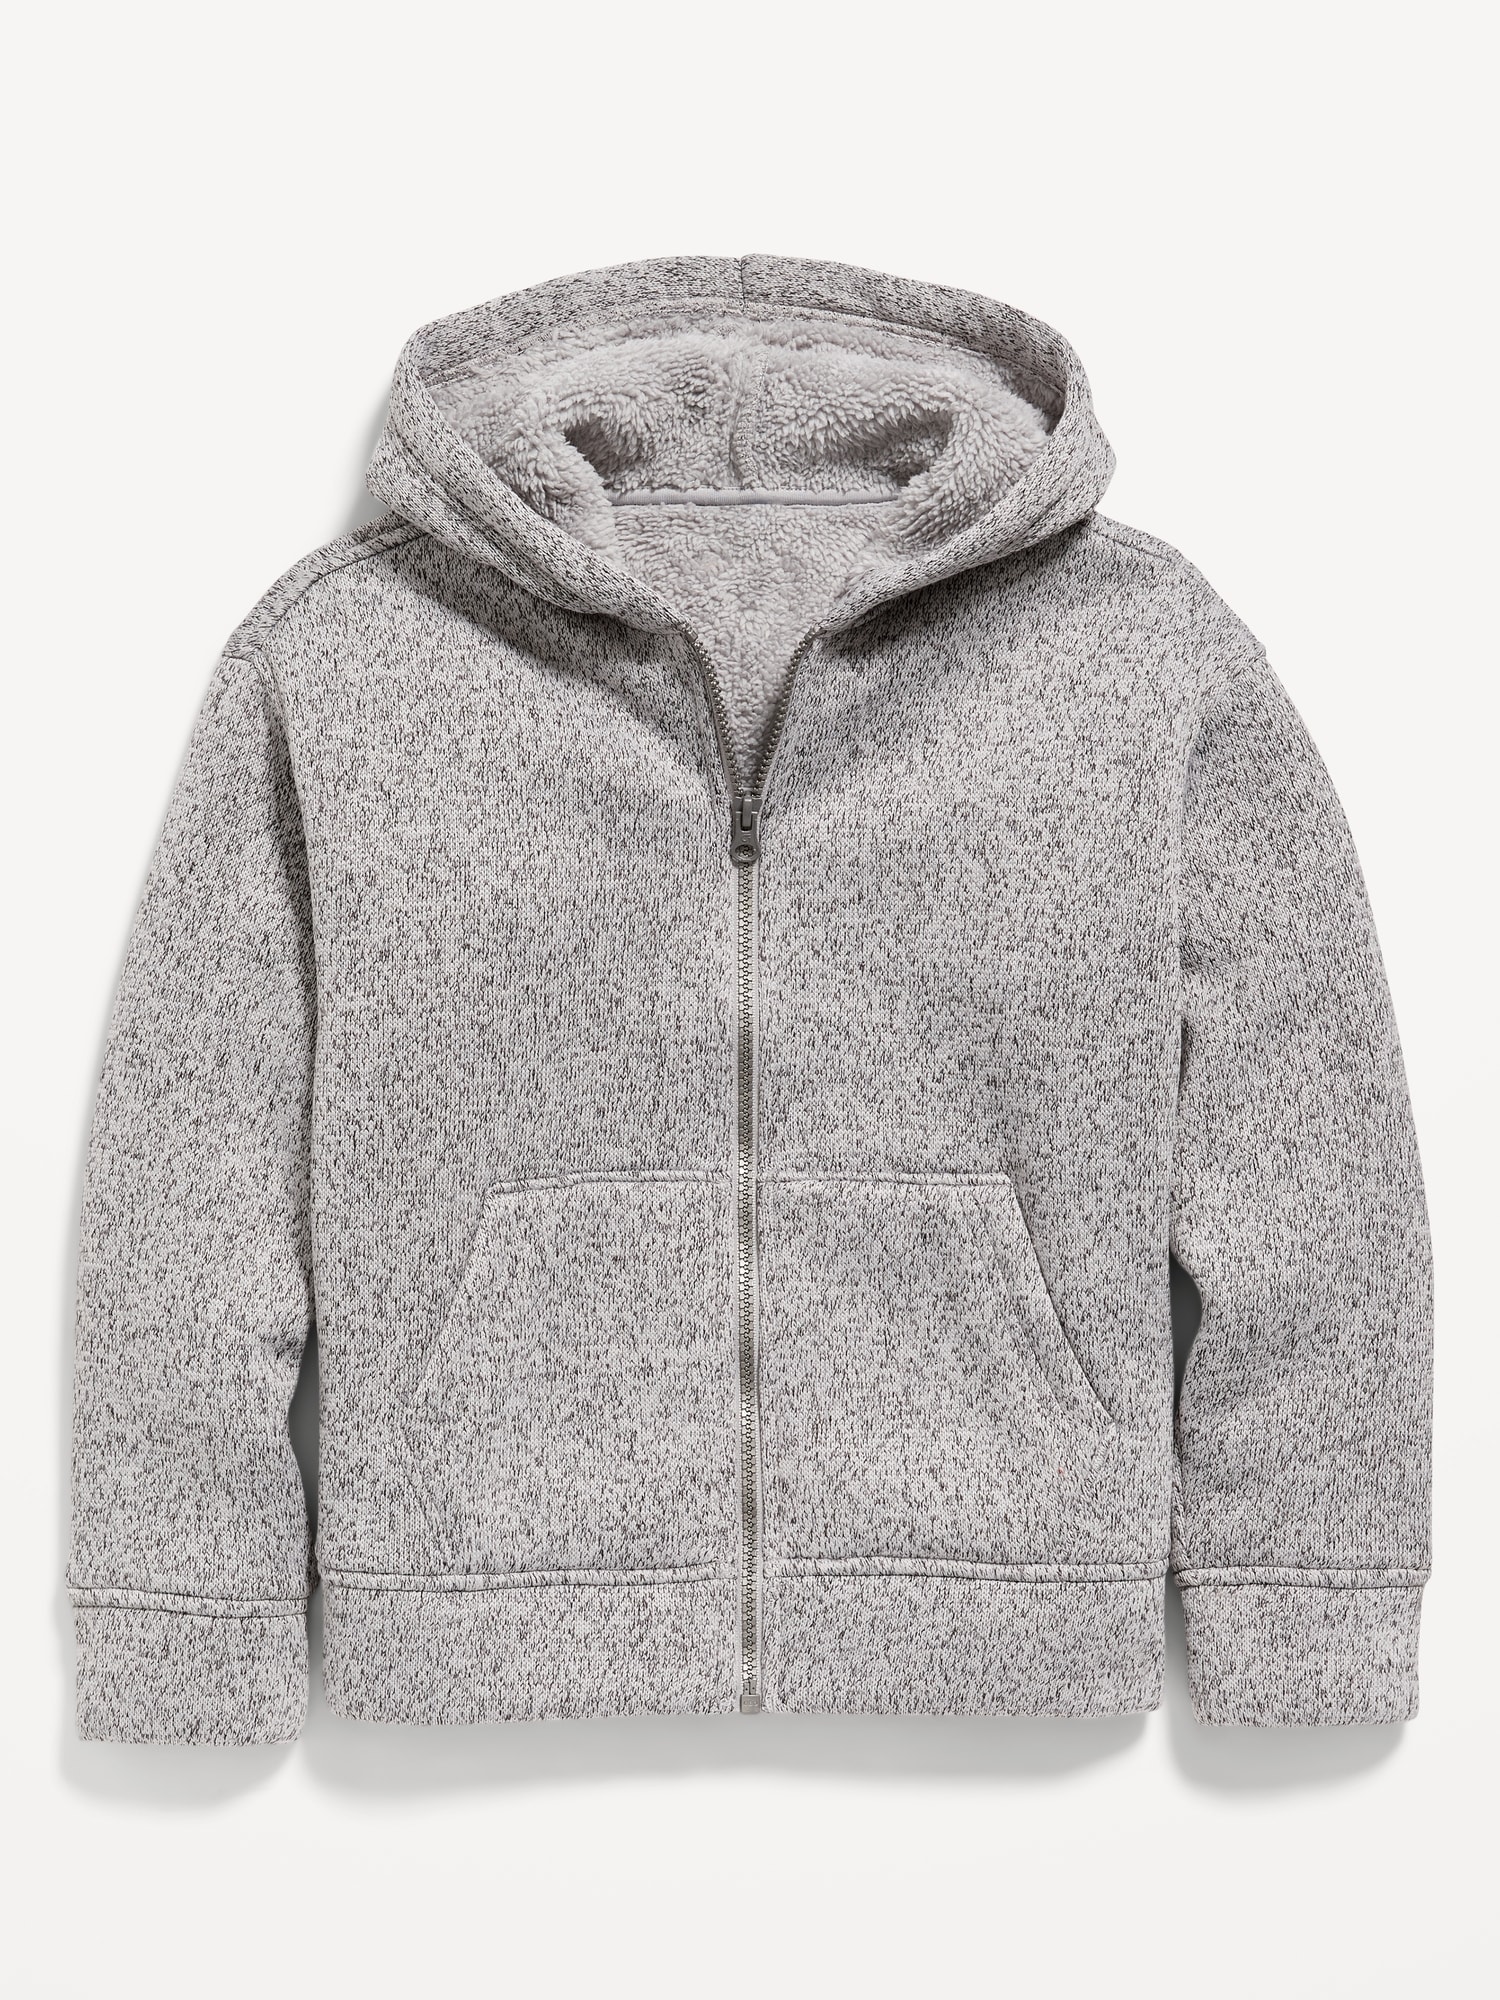 Cozy Sweater-Fleece Sherpa-Lined Zip Hoodie for Boys | Old Navy